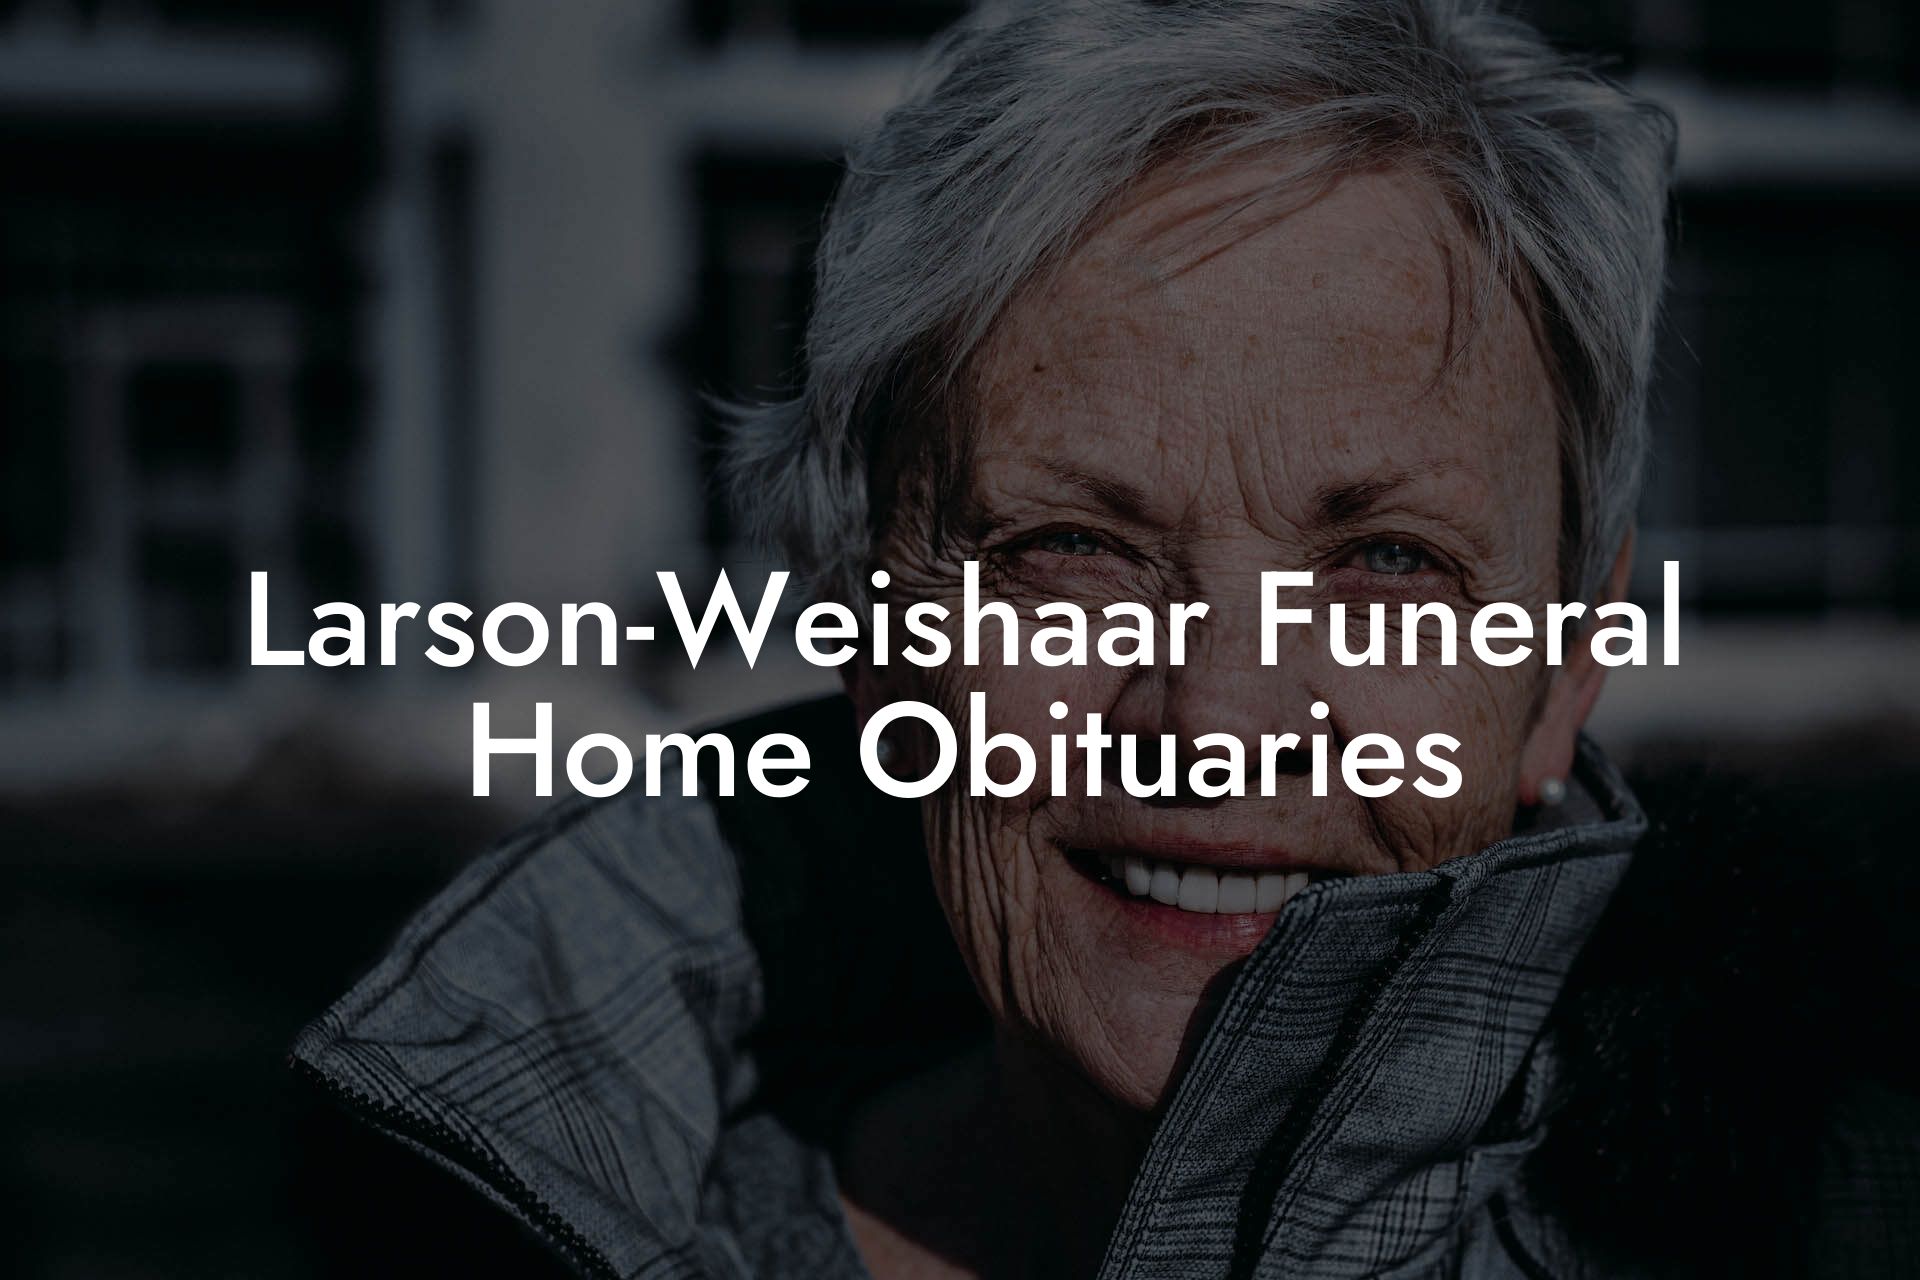 Larson-Weishaar Funeral Home Obituaries